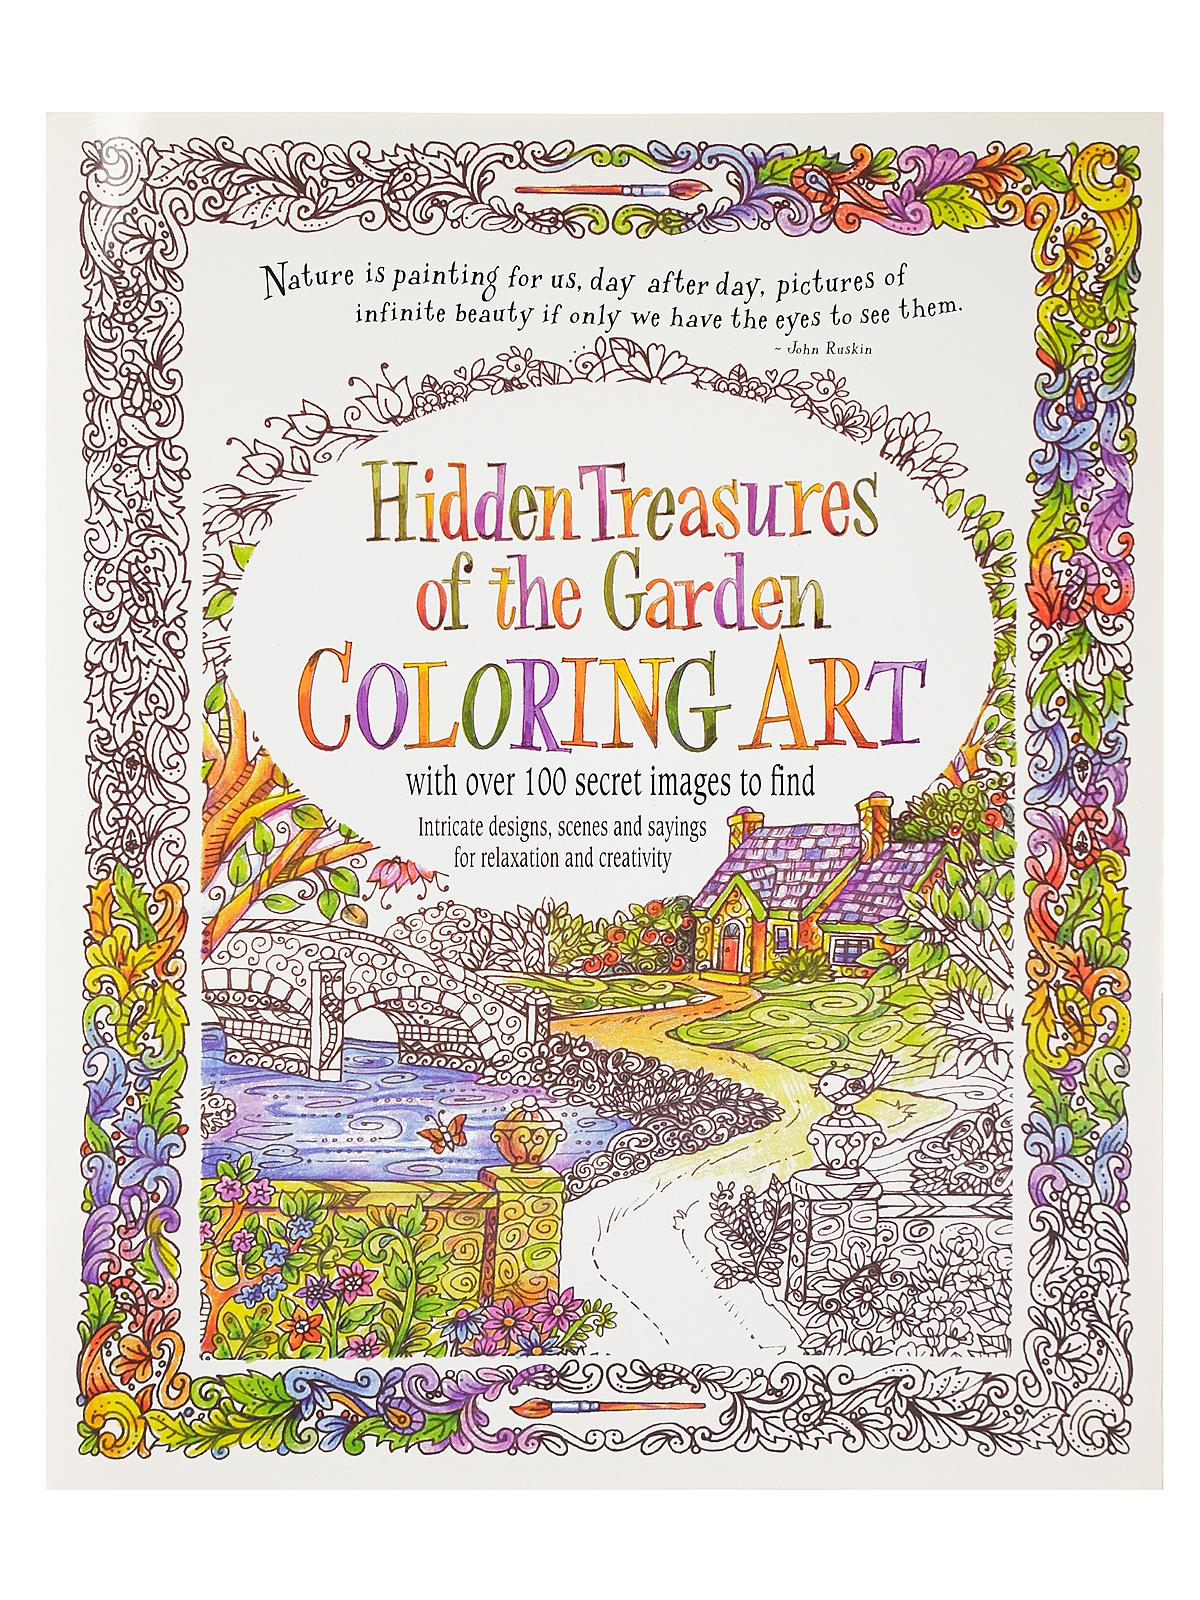 Coloring Art Adult Coloring Books Hidden Treasures Of The Garden